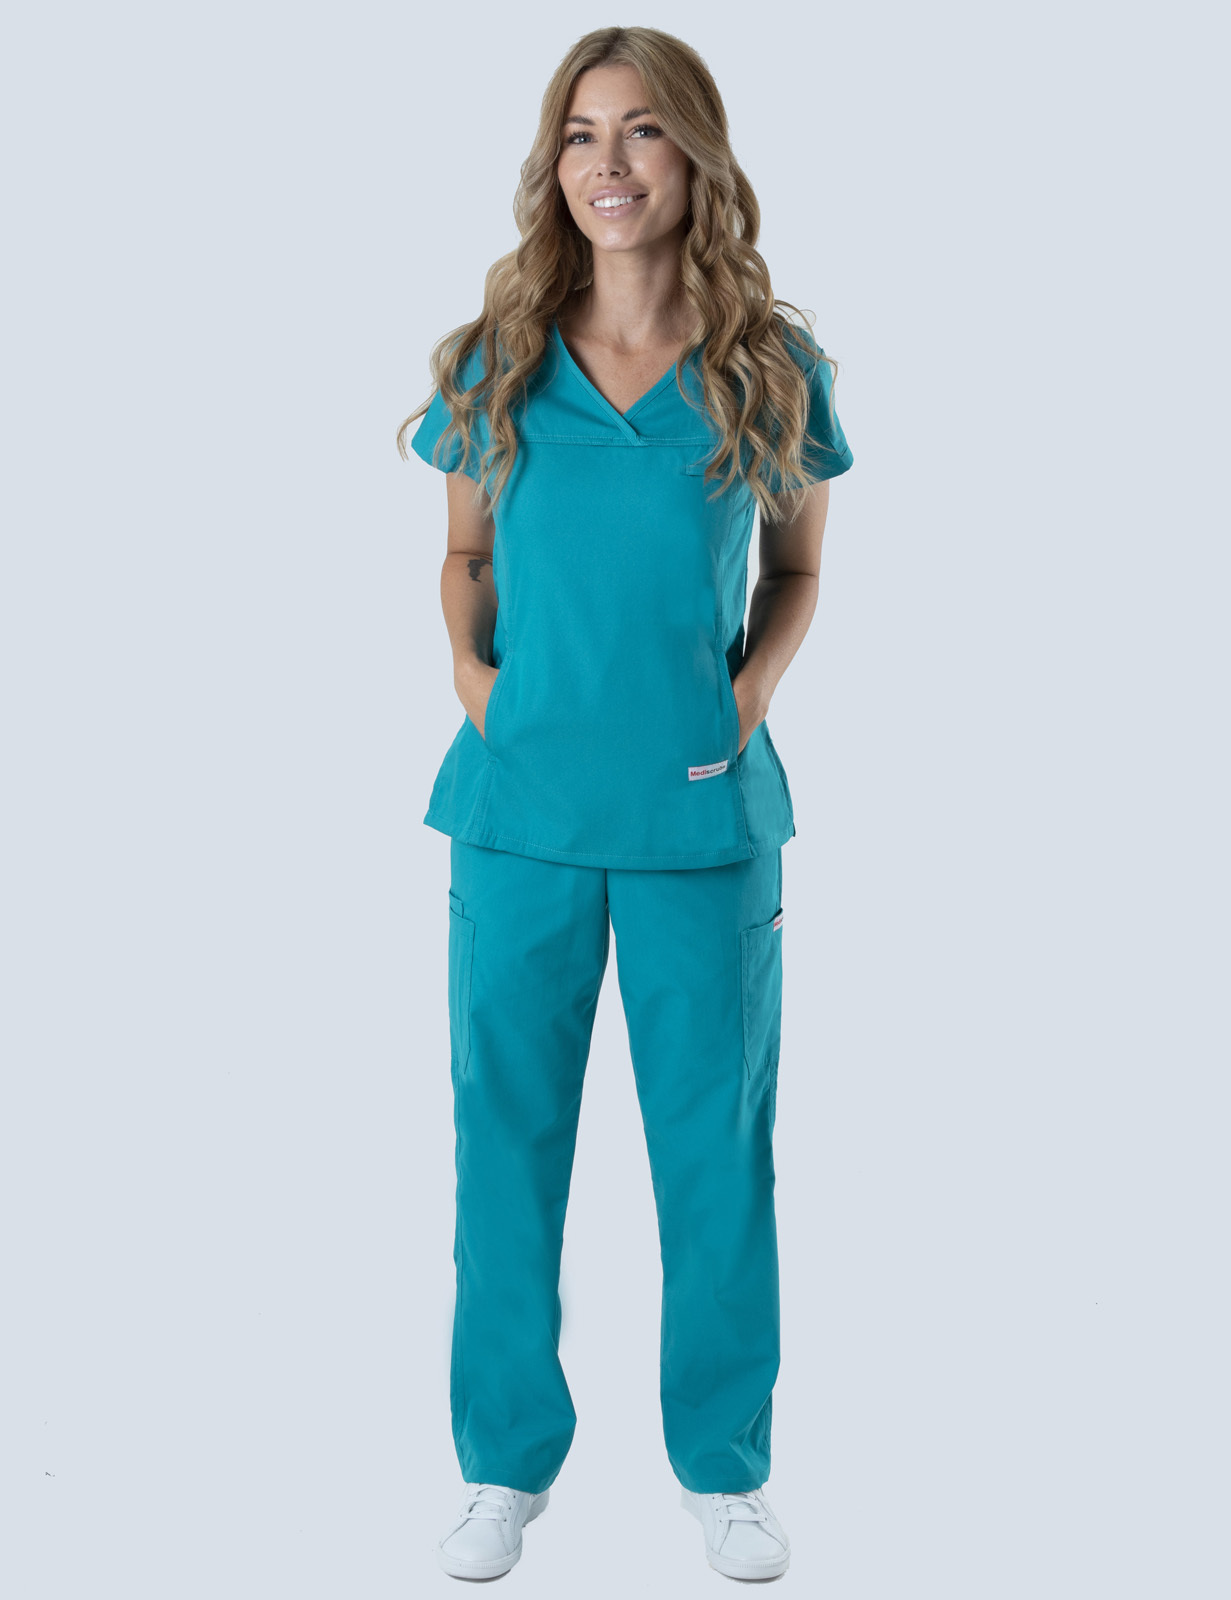 ECT Enrolled Nurse Uniform Set Bundle (Women's Fit Solid Top and Cargo Pants in Teal + Logos)